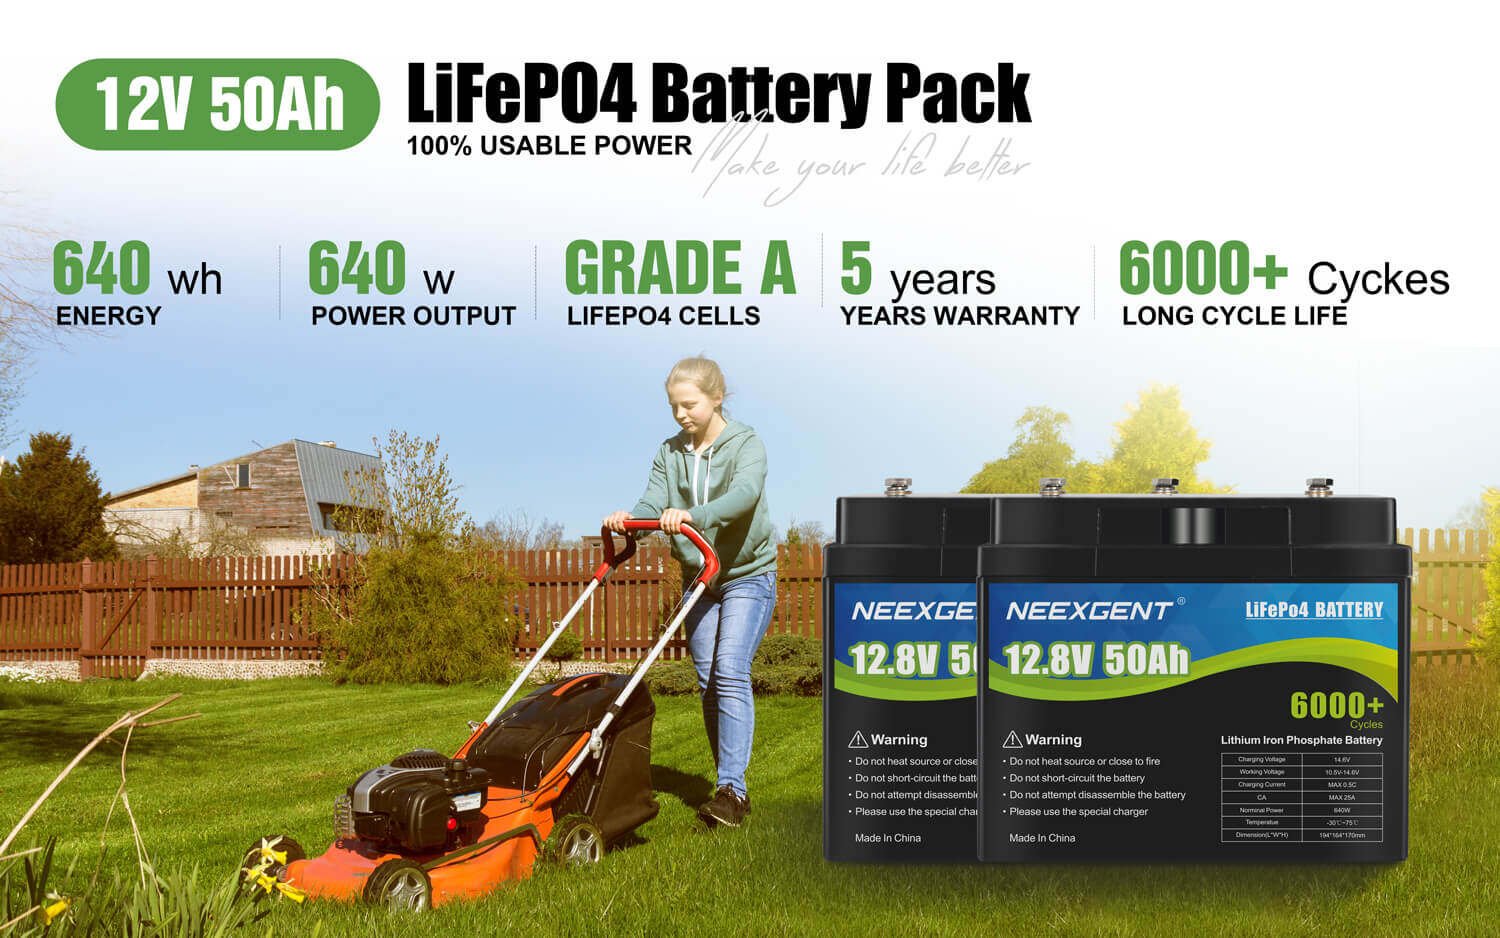 12.8 volt lifepo4 battery pack